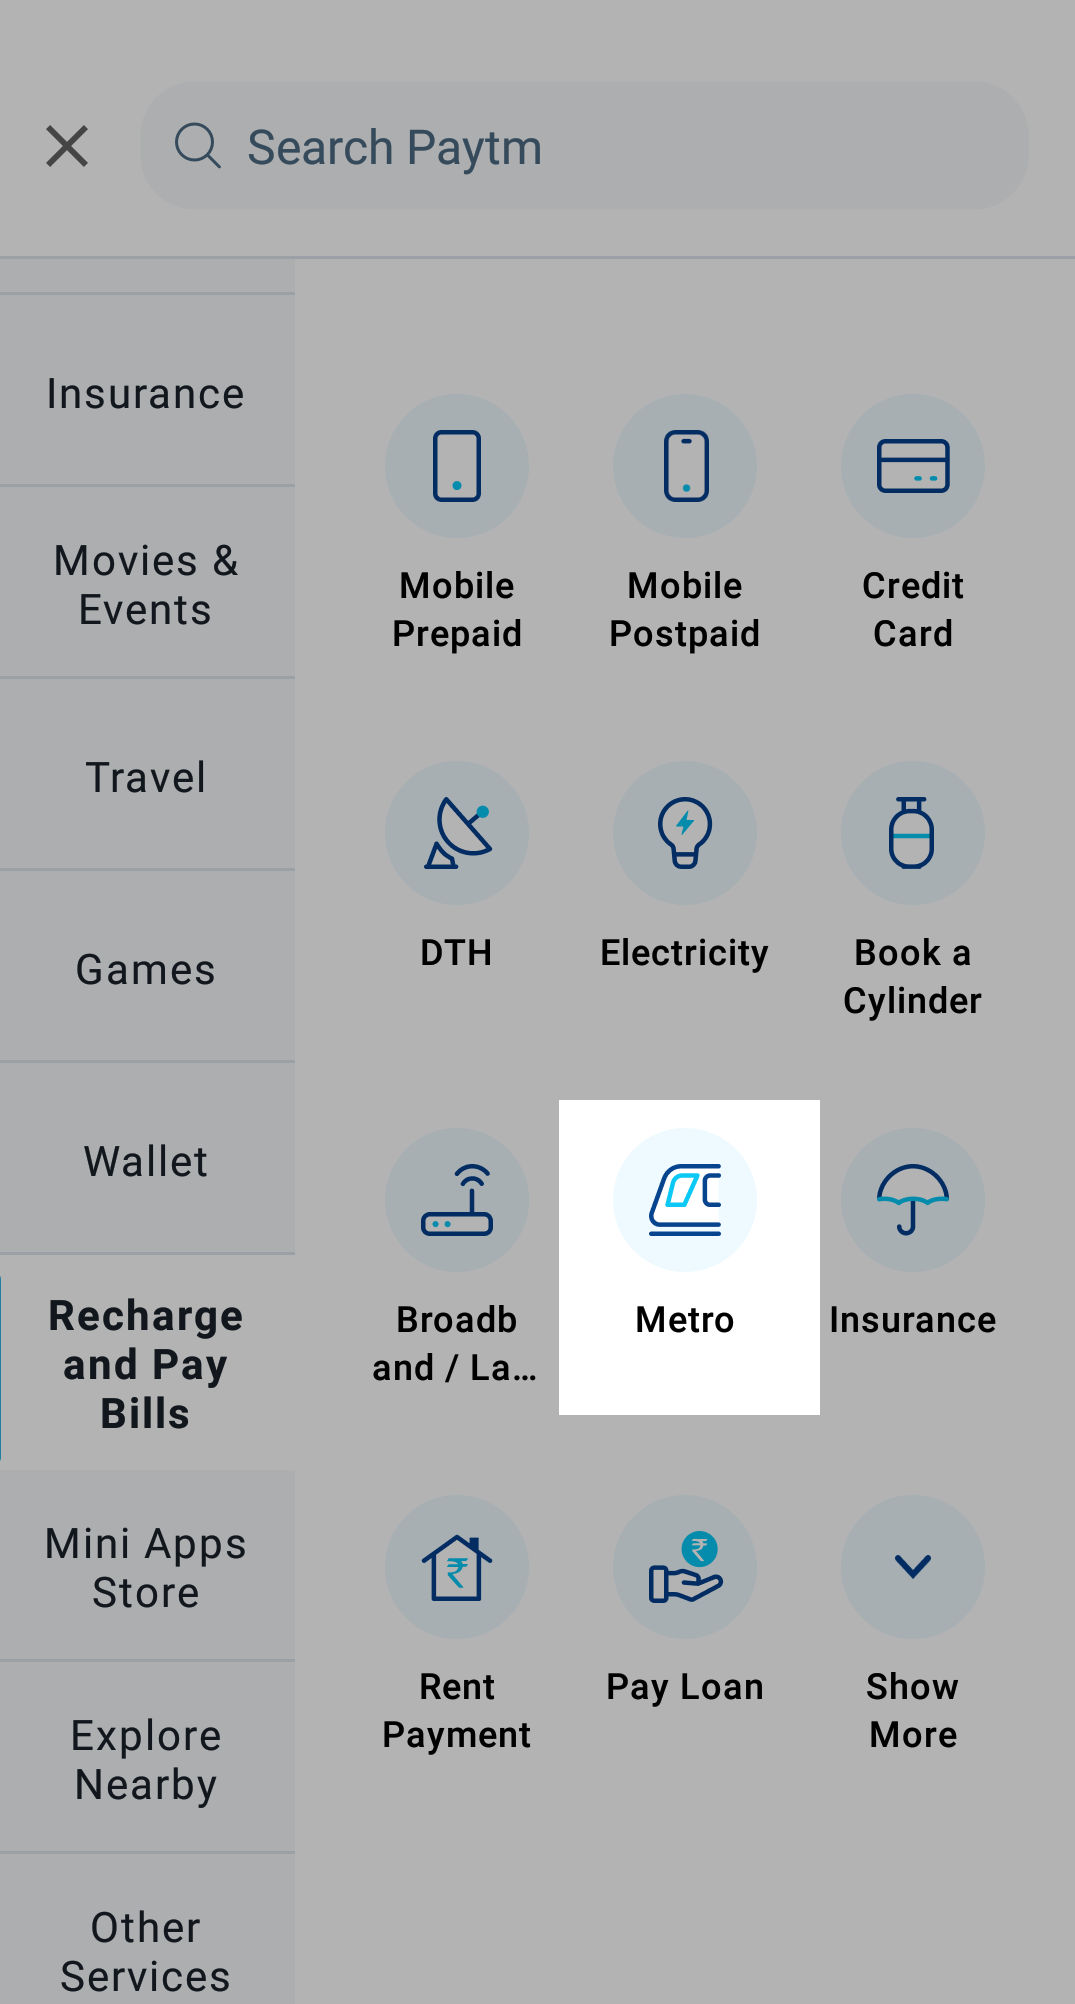 Metro Passengers of Delhi, Mumbai, Hyderabad, and Bangalore can easily recharge their metro card on Paytm